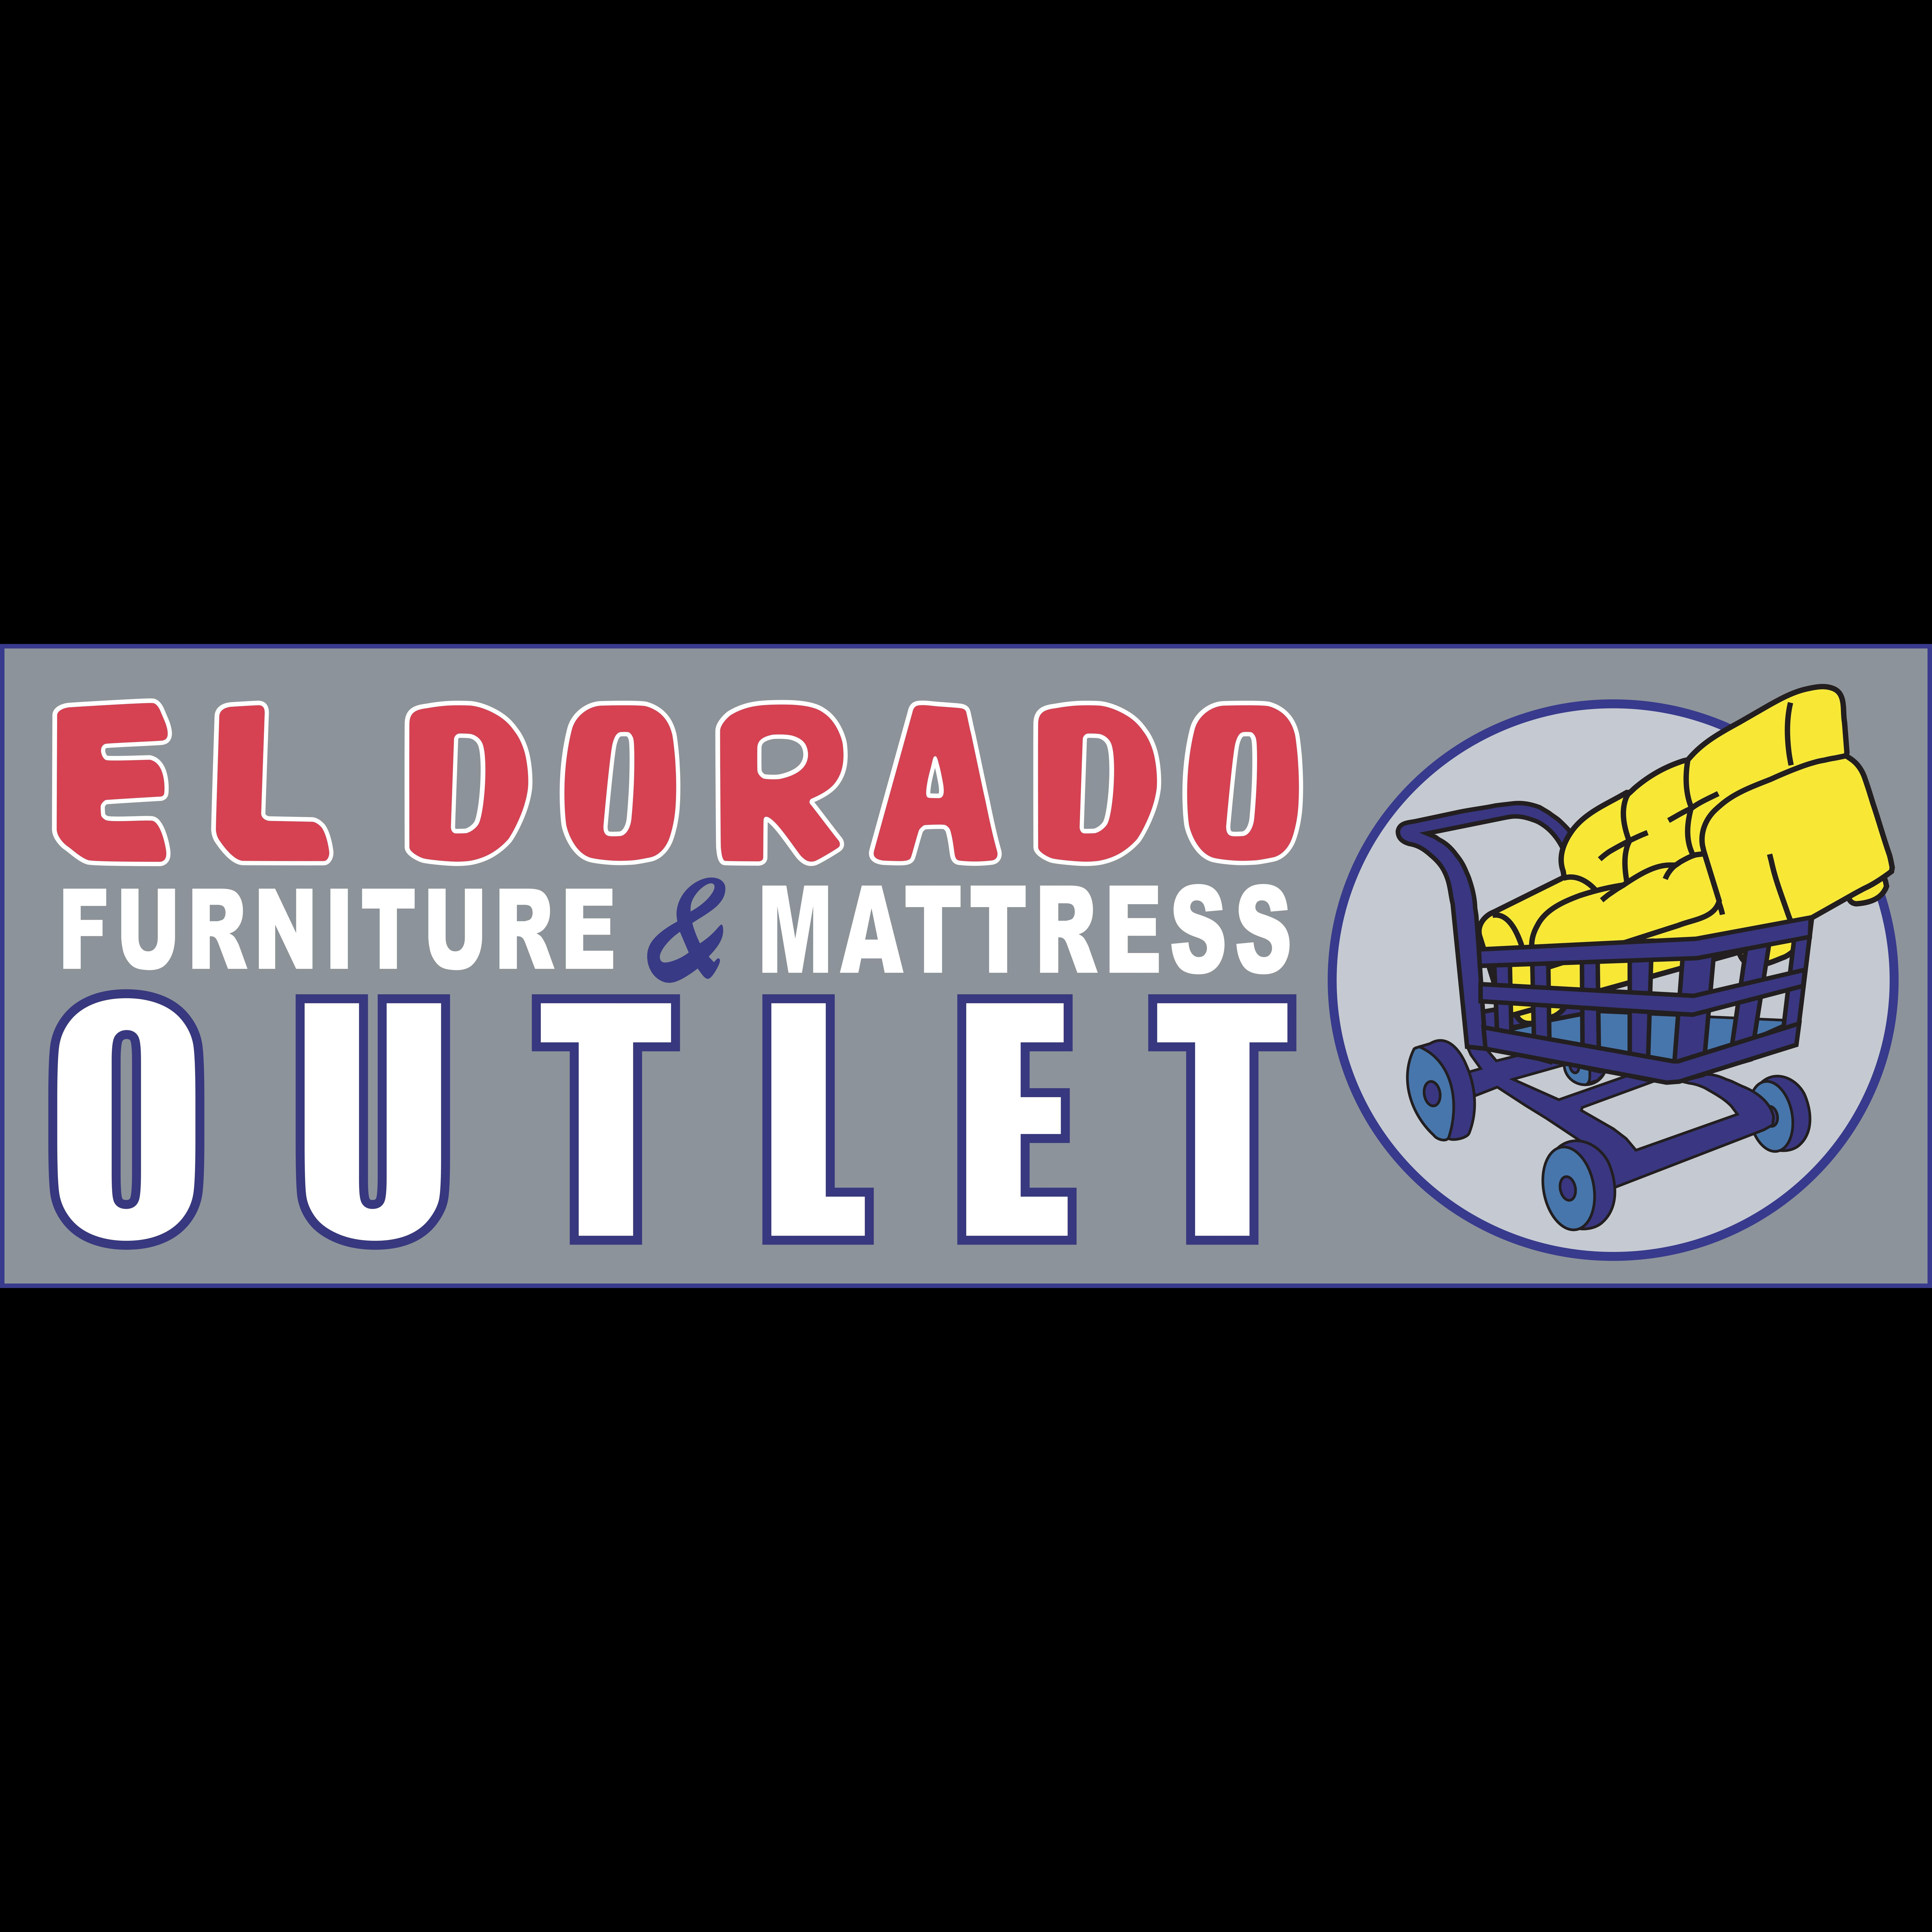 El Dorado Furniture - Furniture & Mattress Outlet - Airport Store - Miami, FL 33126 - (305)477-1909 | ShowMeLocal.com